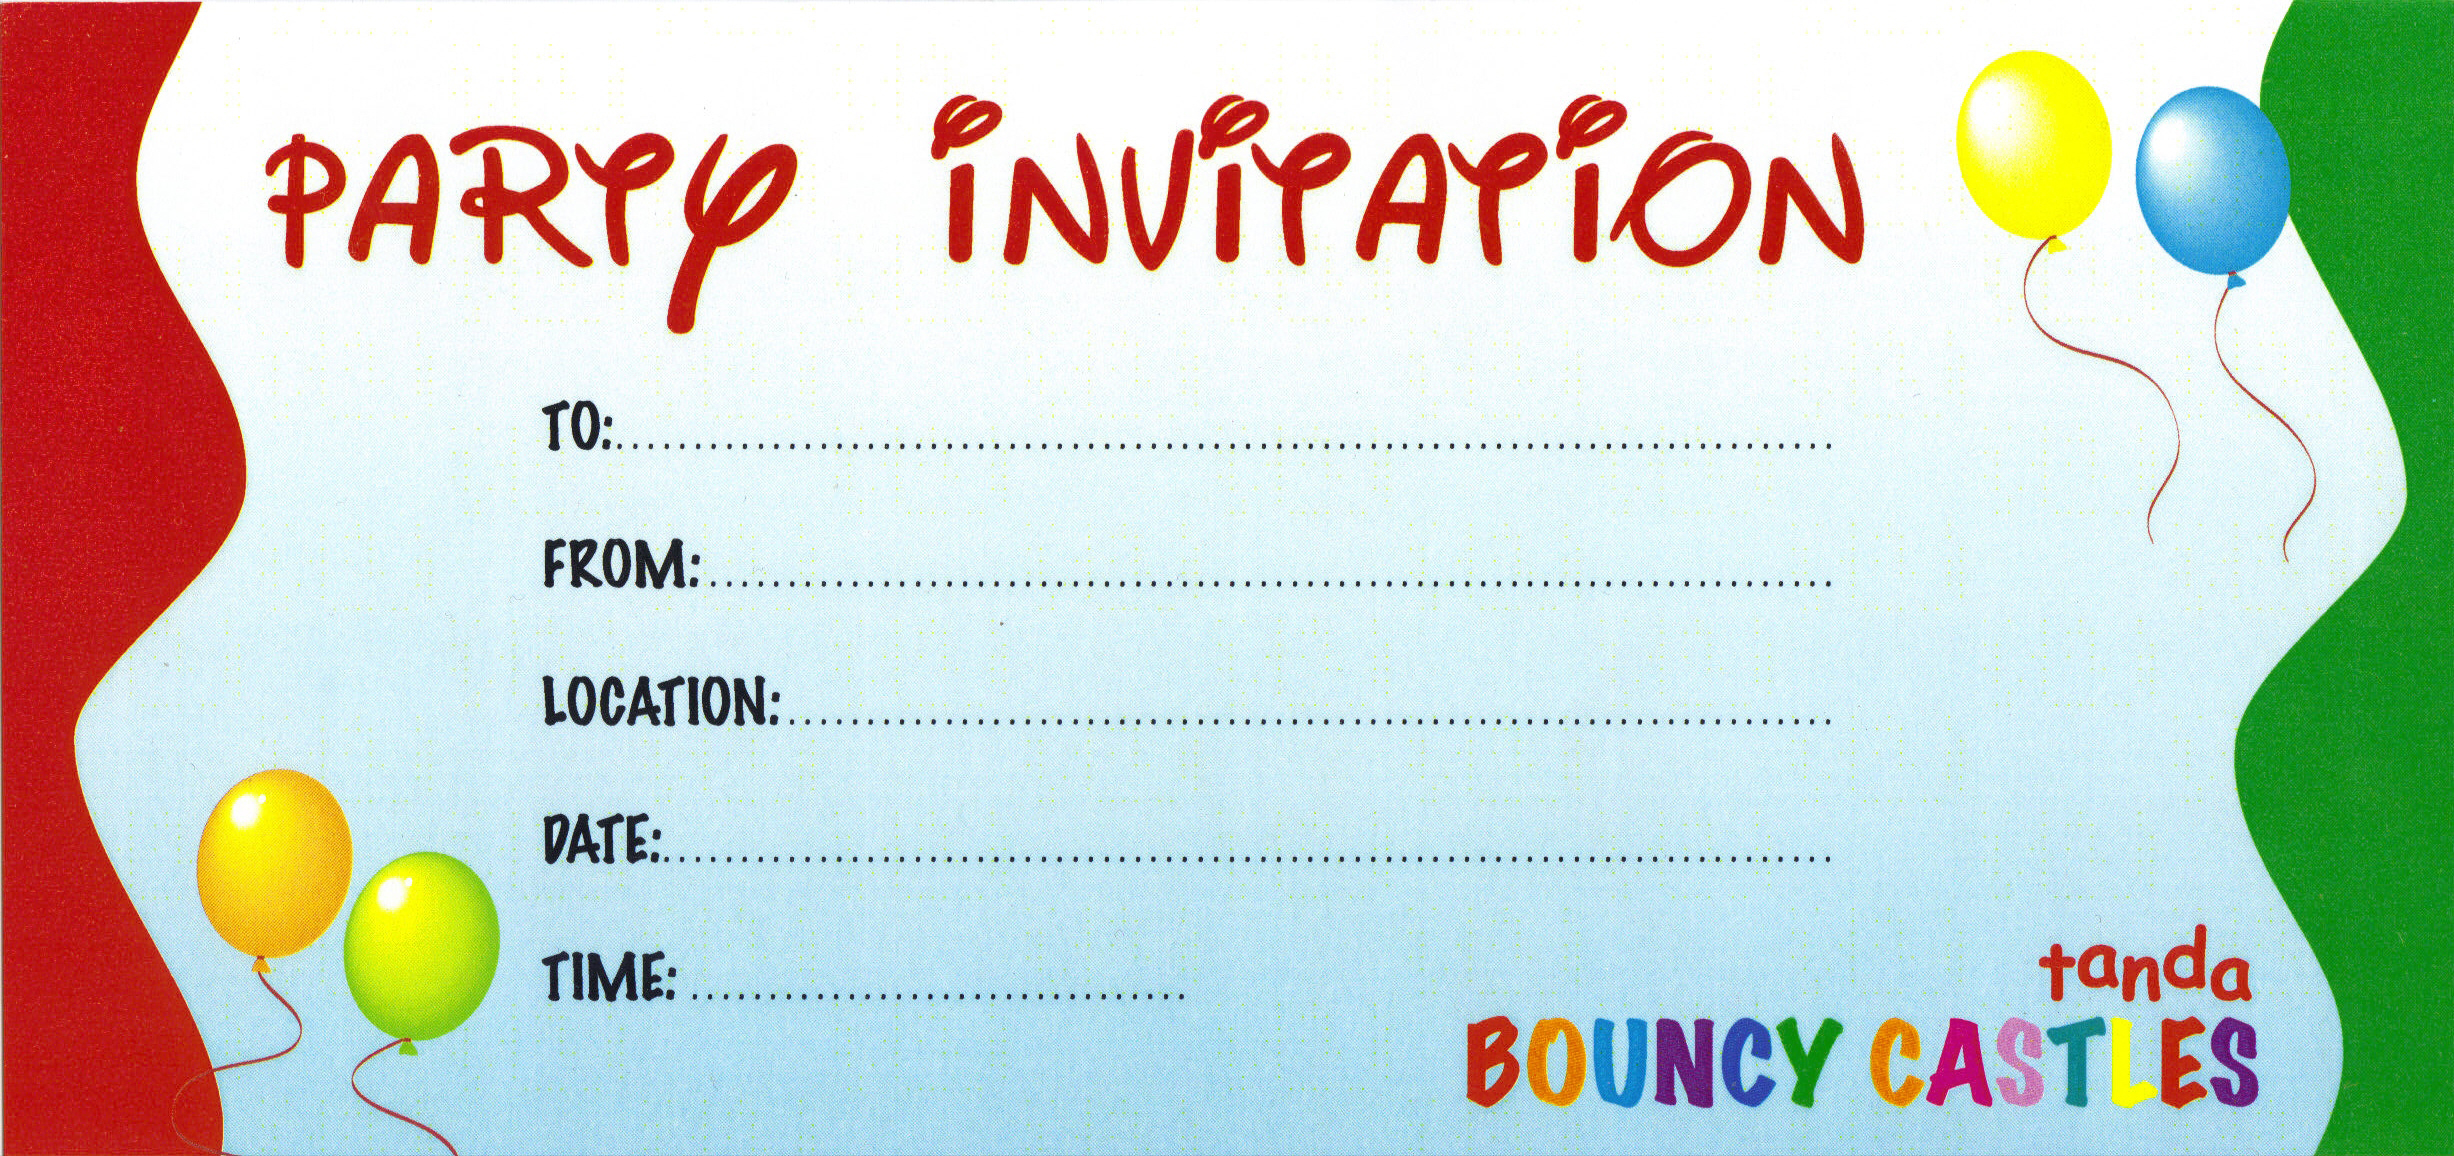 Party Invitation Card